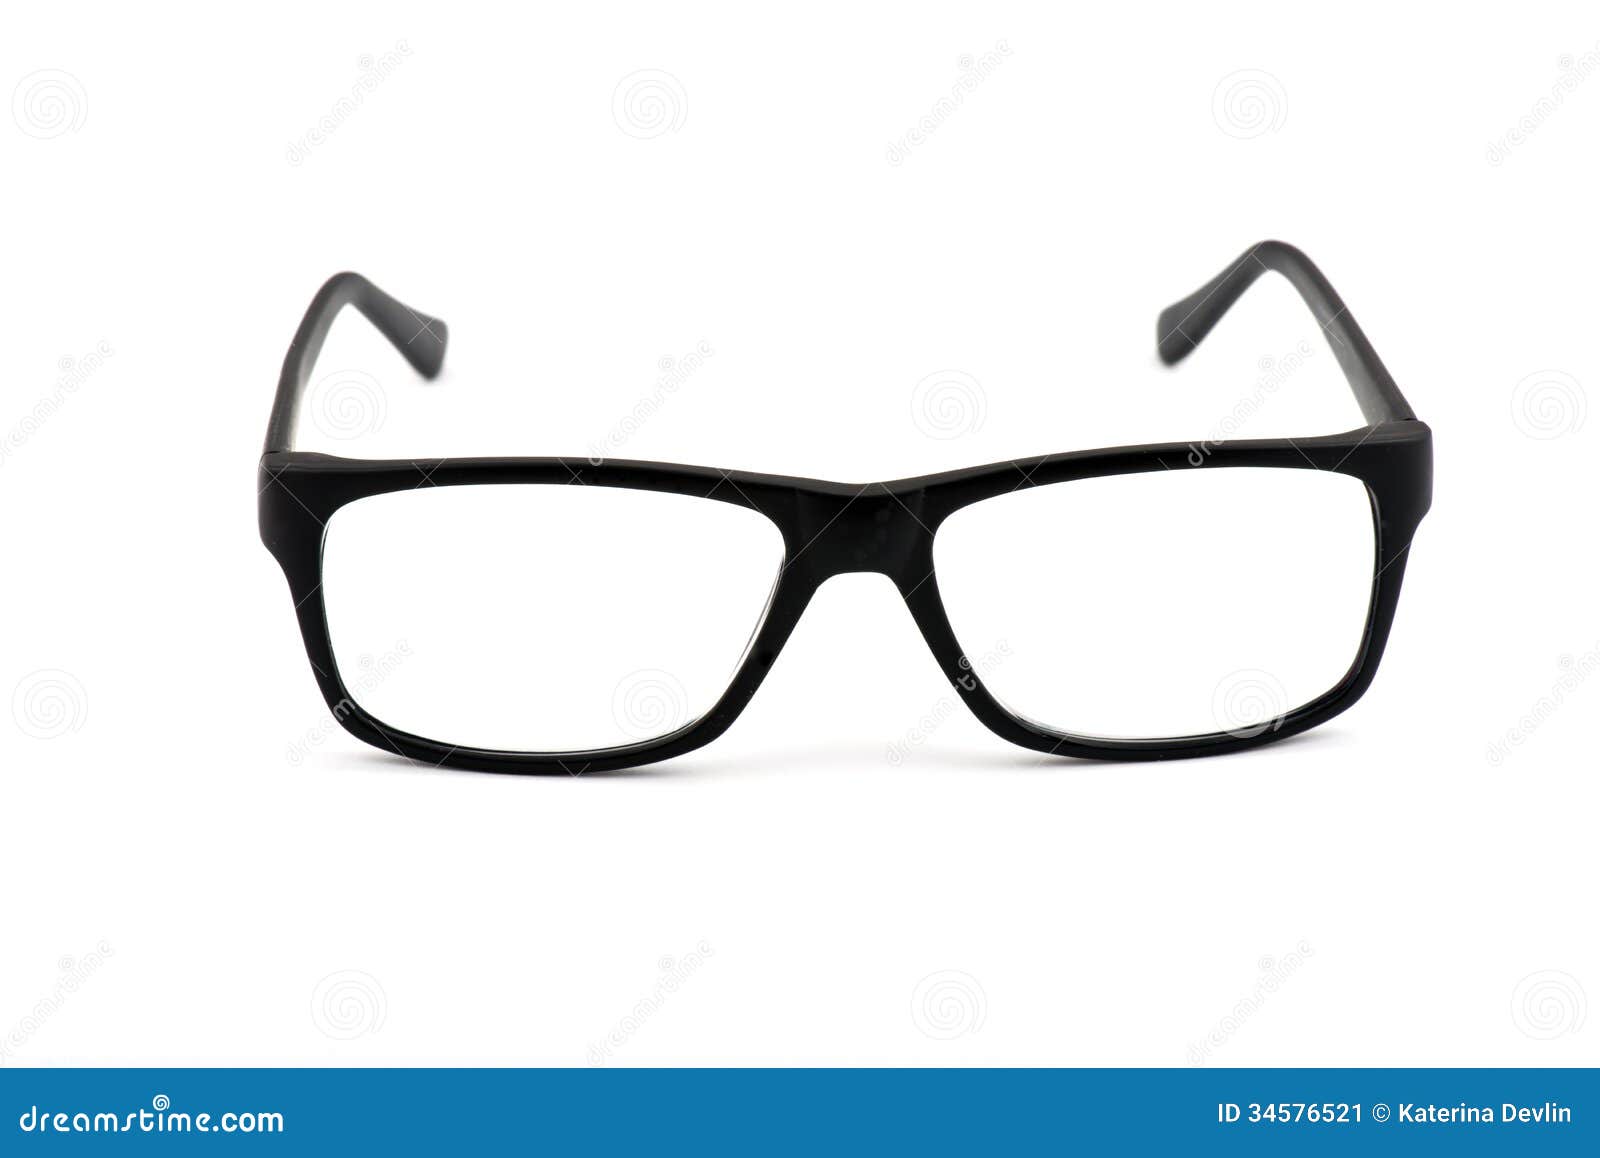 Glasses isolated stock image. Image of light, lens, glasses - 34576521